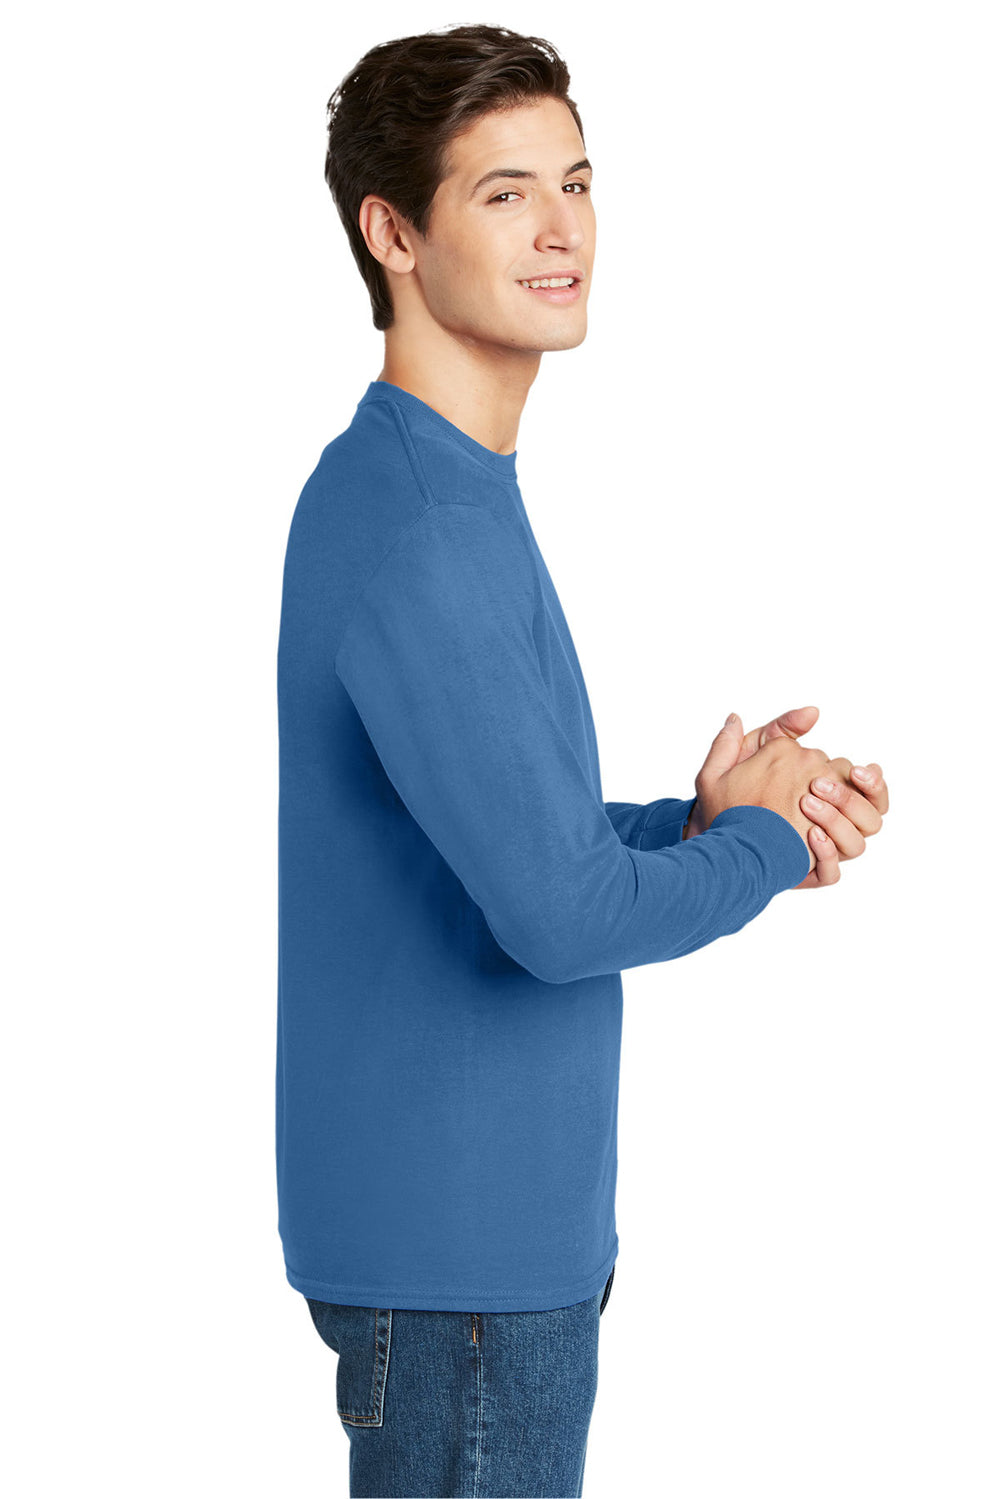 Hanes 5586 Mens ComfortSoft Long Sleeve Crewneck T-Shirt Carolina Blue Side